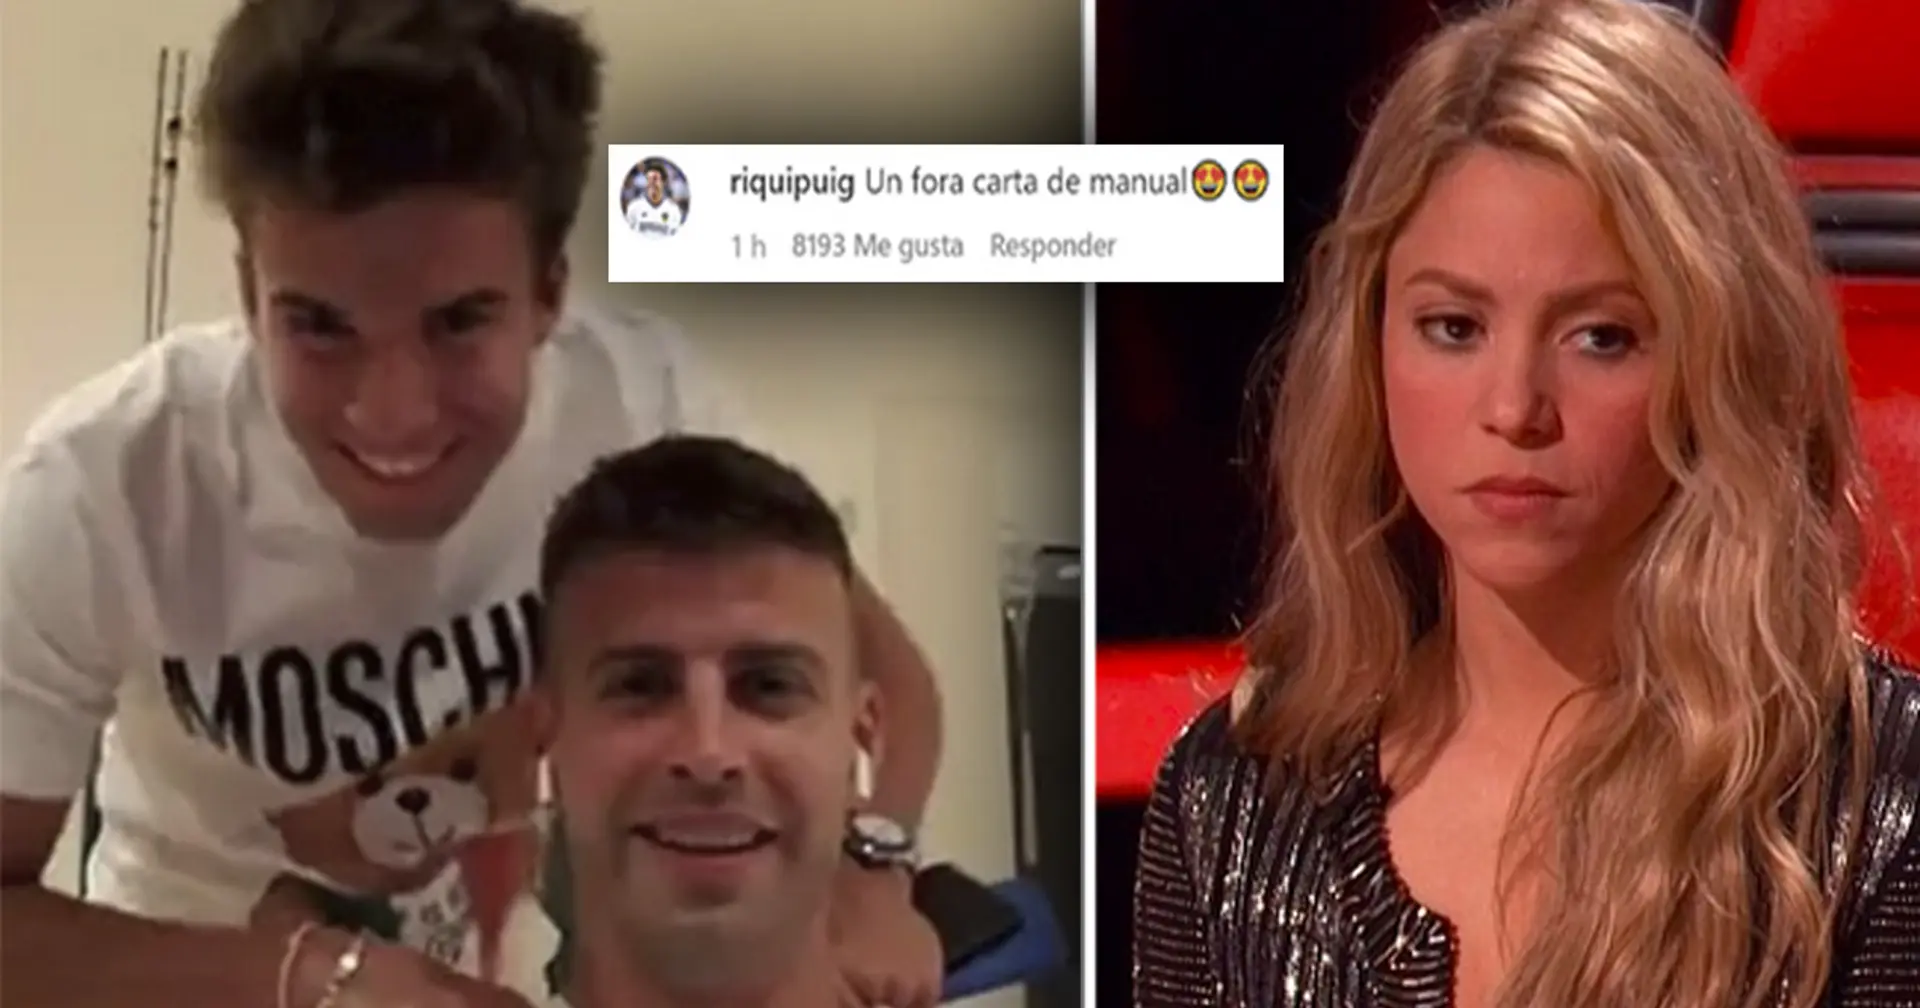 Riqui Puig apparently trolls Shakira amid Pique's girlfriend pic